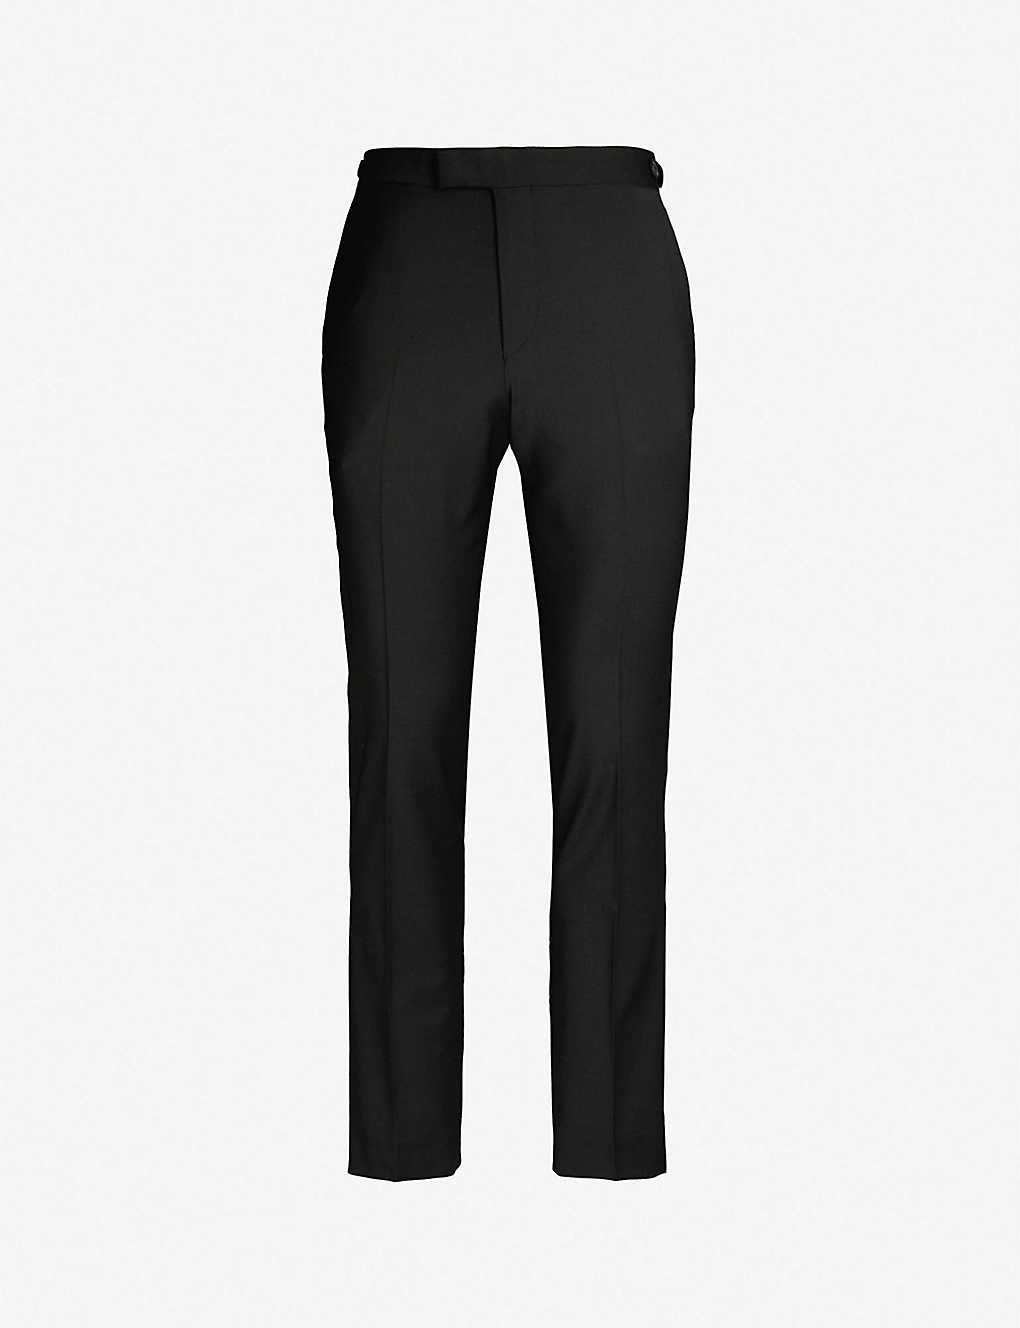 Reiss Marlie Slim Fit Wool Blend Suit Trousers | REISS USA